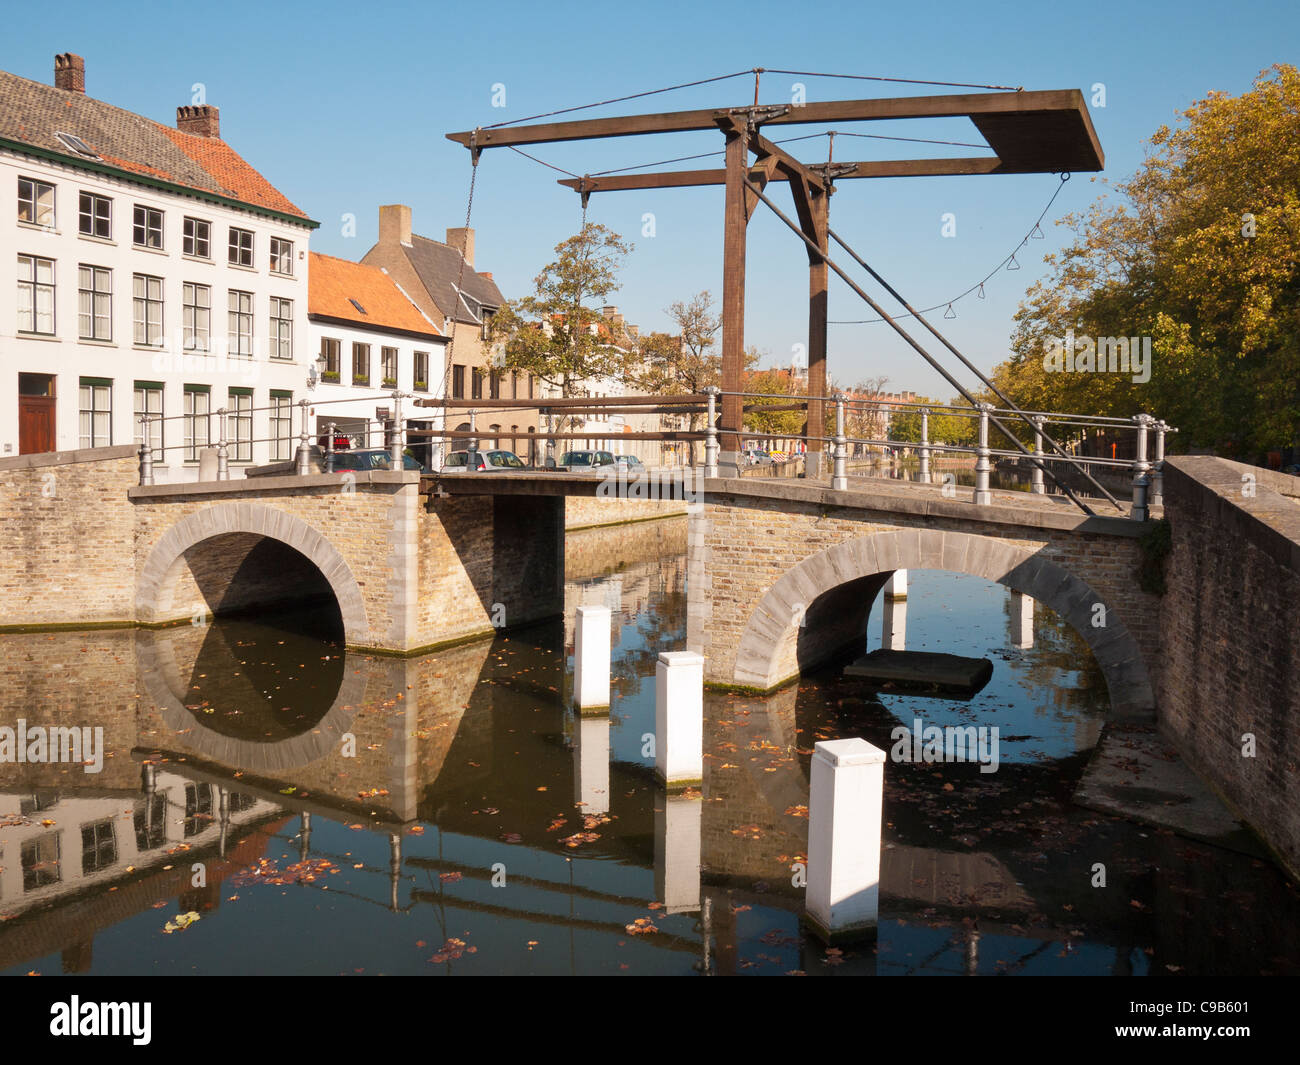 Duinenbrug swing bridge over the Langerei canal in northeast Bruges, Belgium. Stock Photo